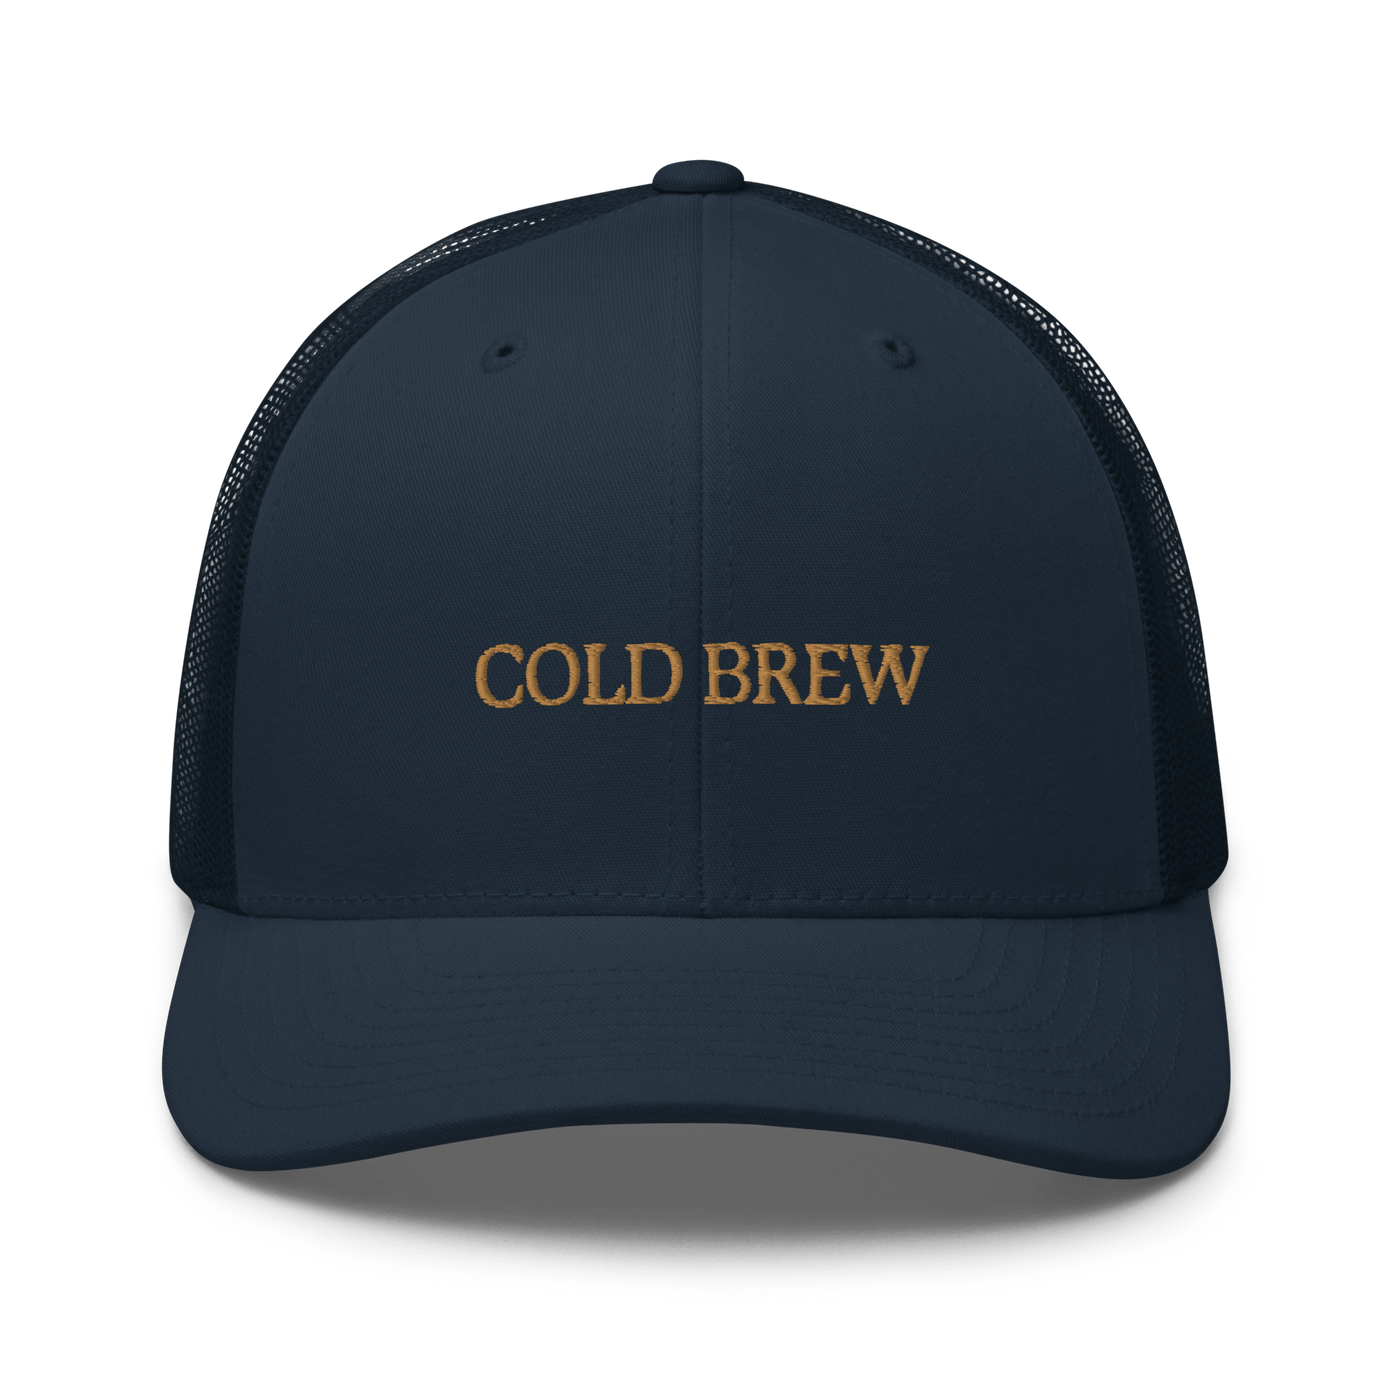 Cold Brew Trucker Cap - Navy - - Just Another Cap Store